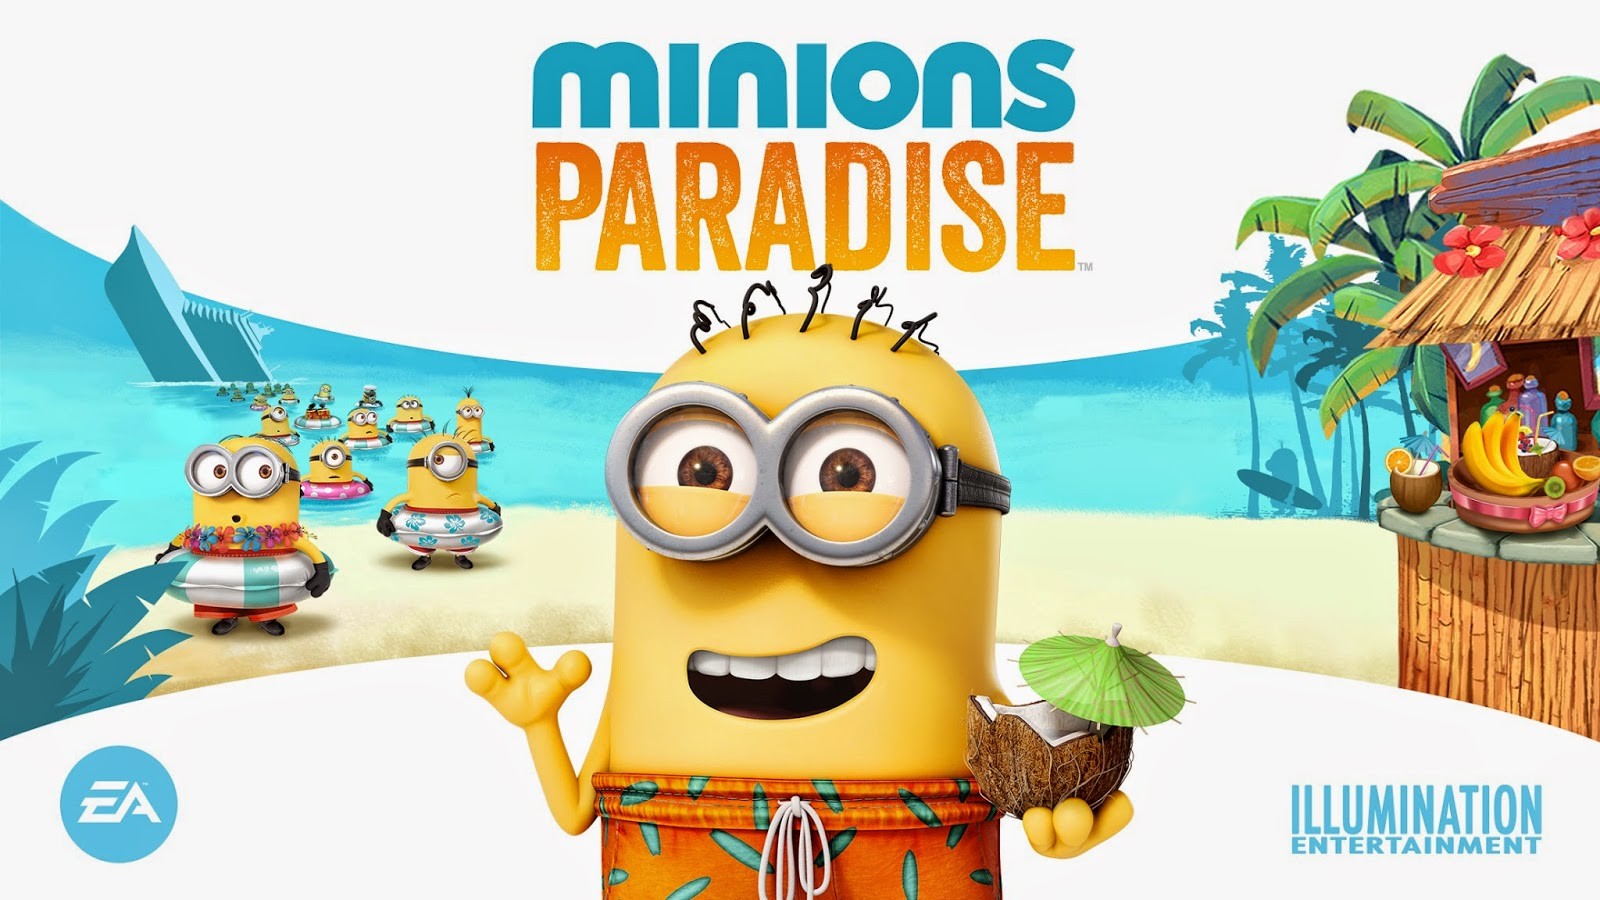 minions paradise download apk